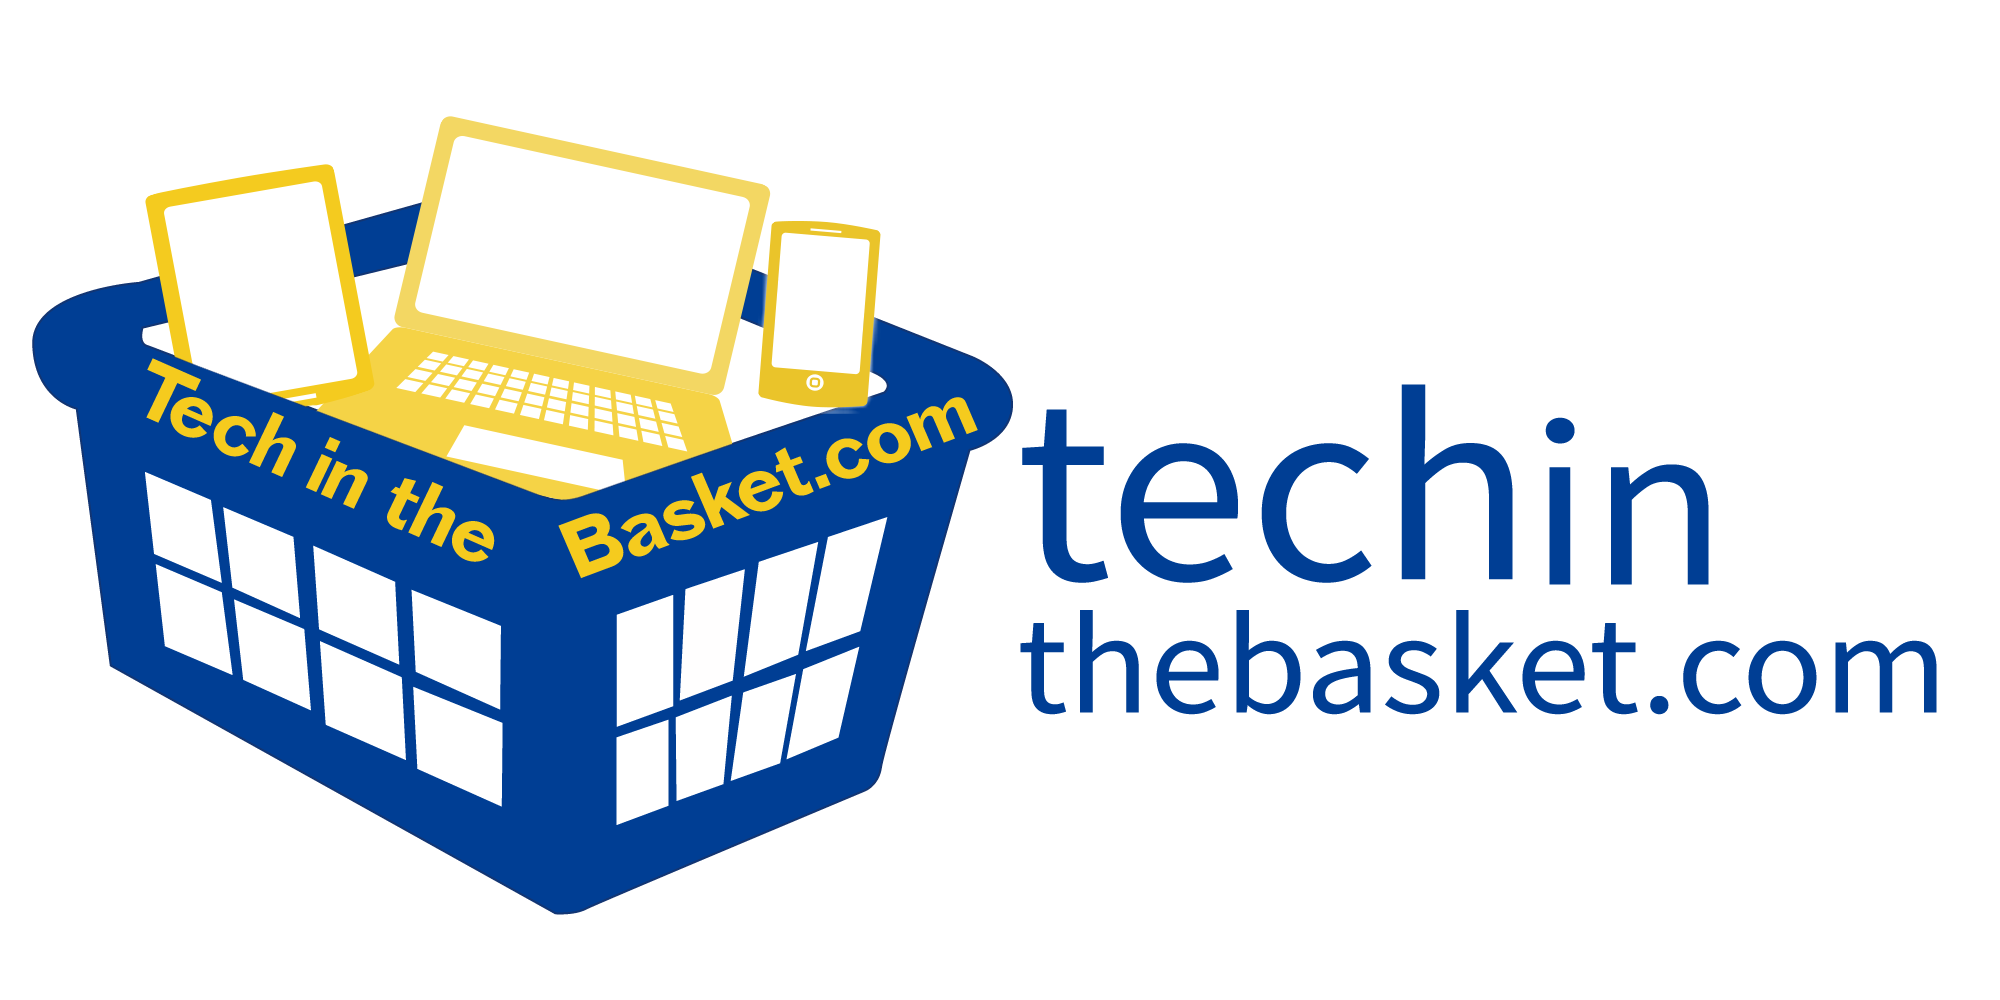 TechInTheBasket Coupons & Promo Codes